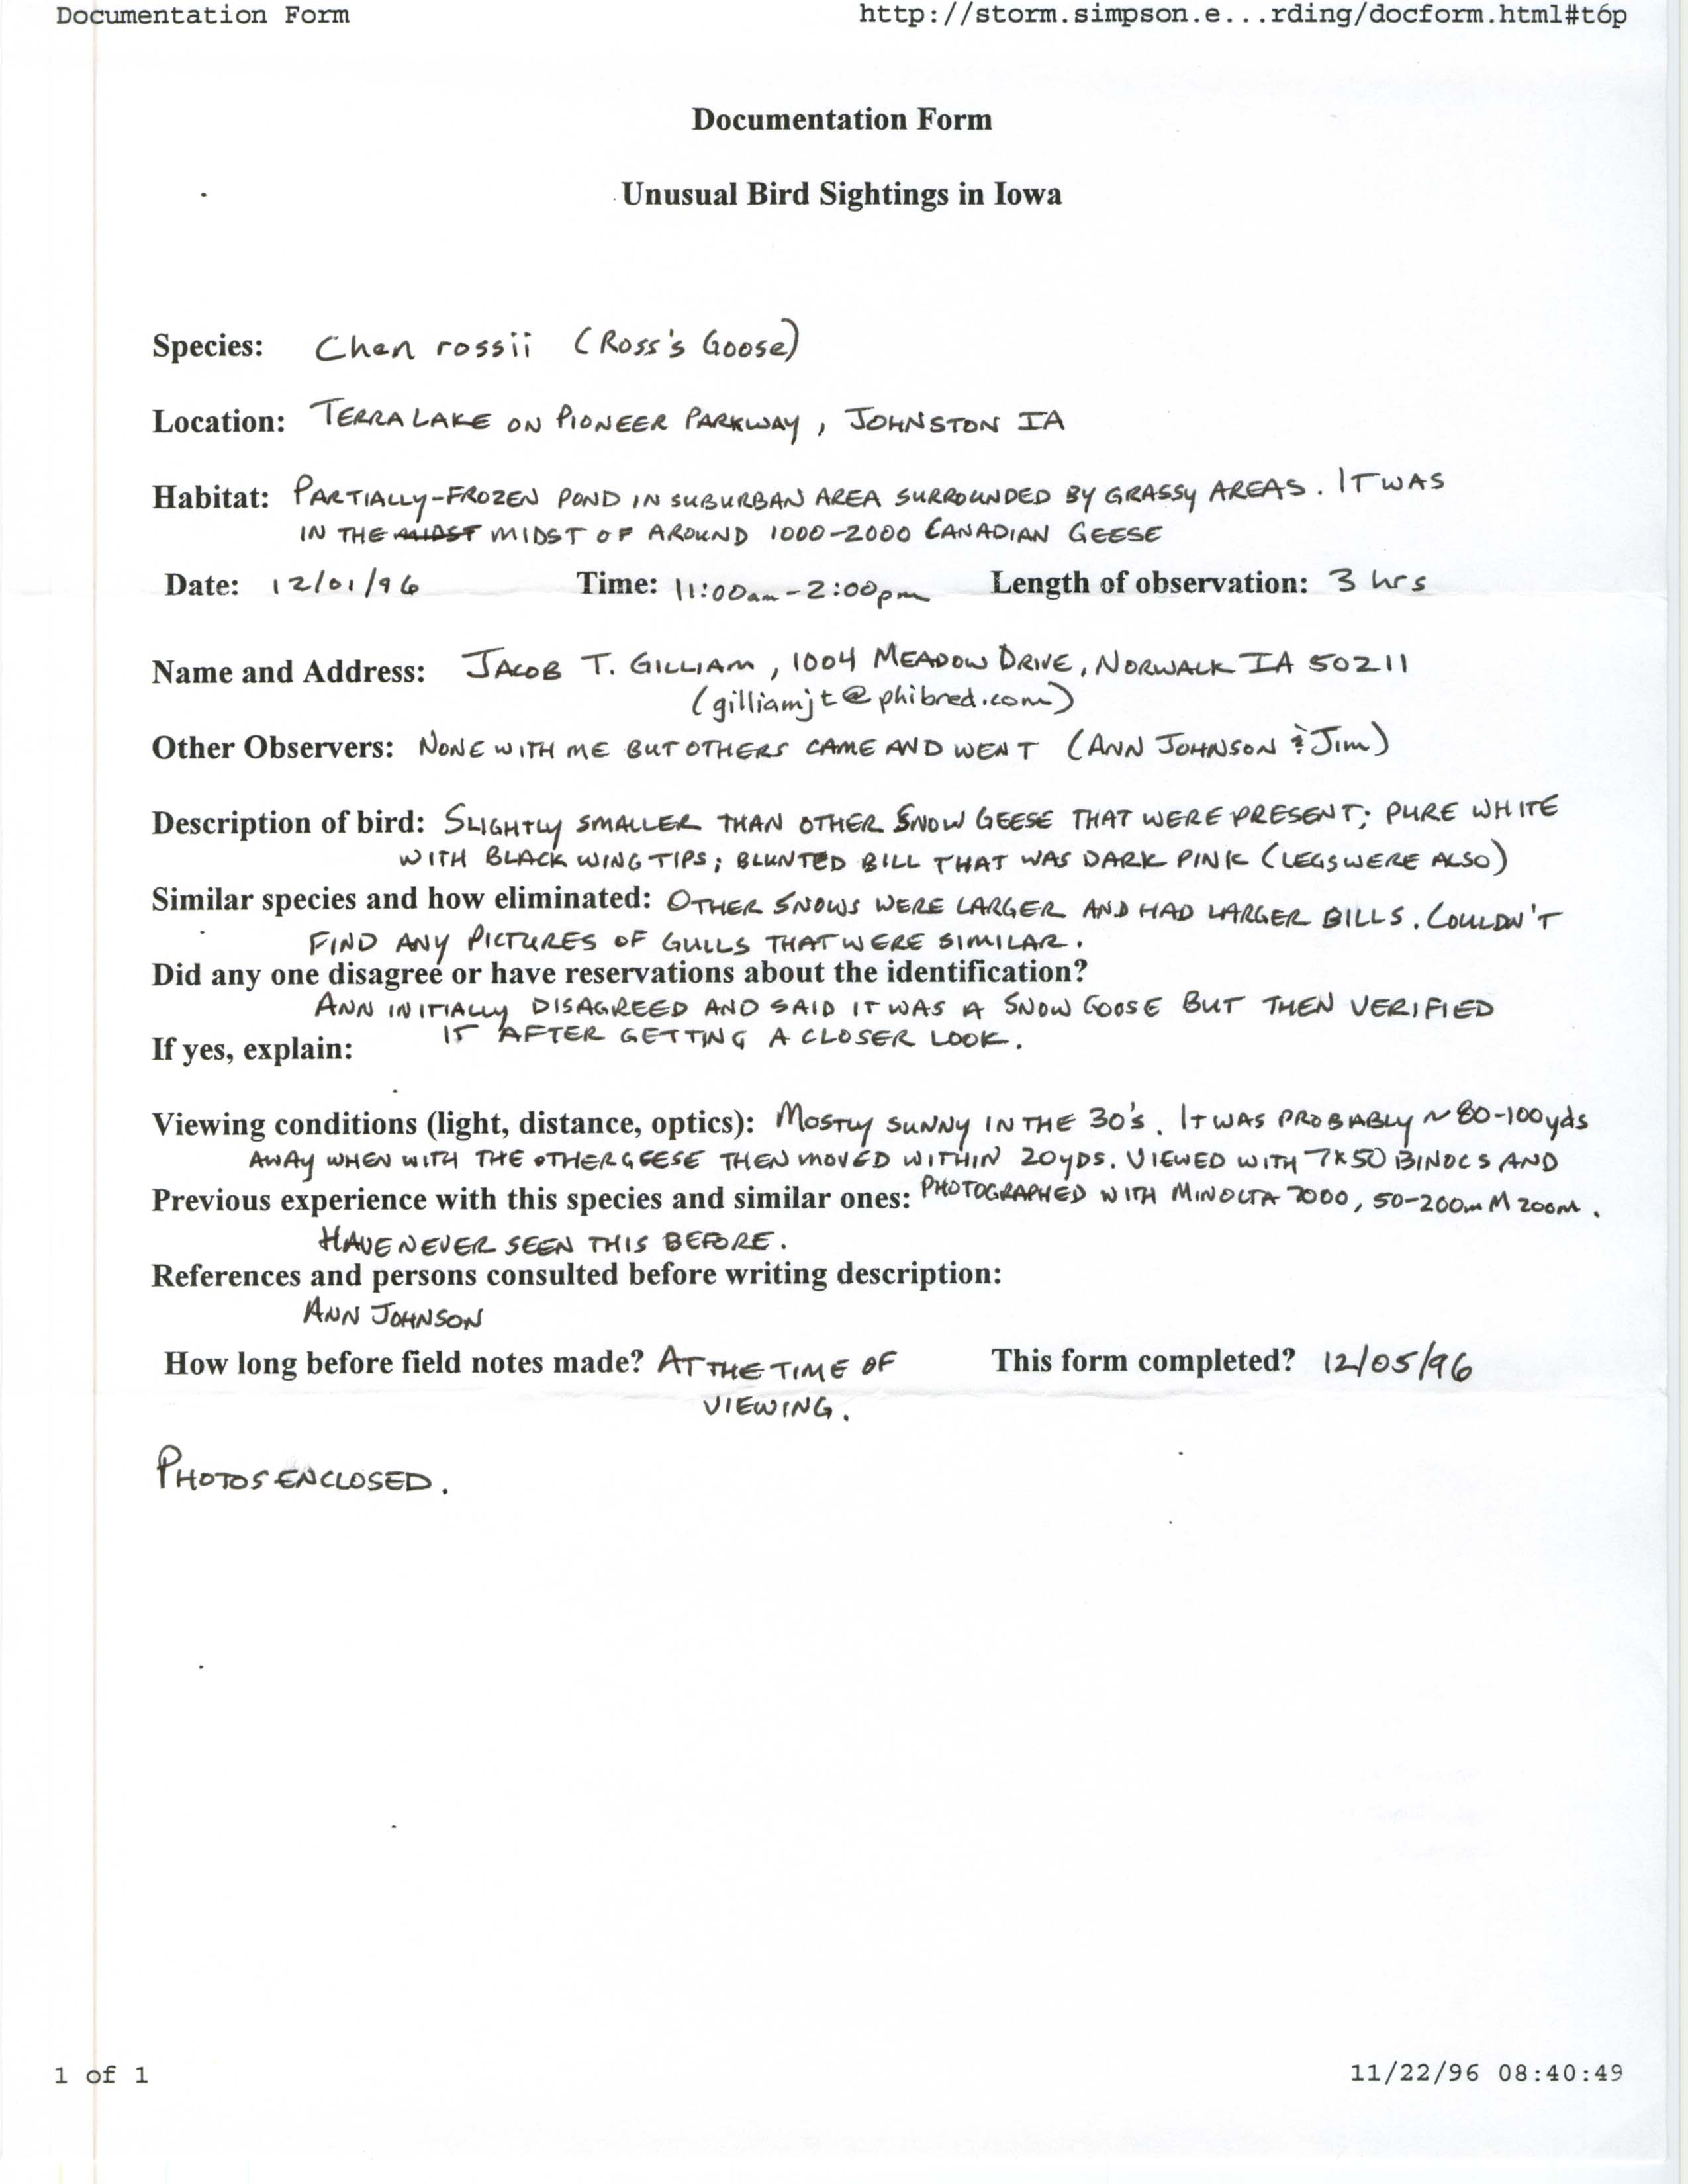 Rare bird documentation form for Ross' Goose at Terra Lake, 1996